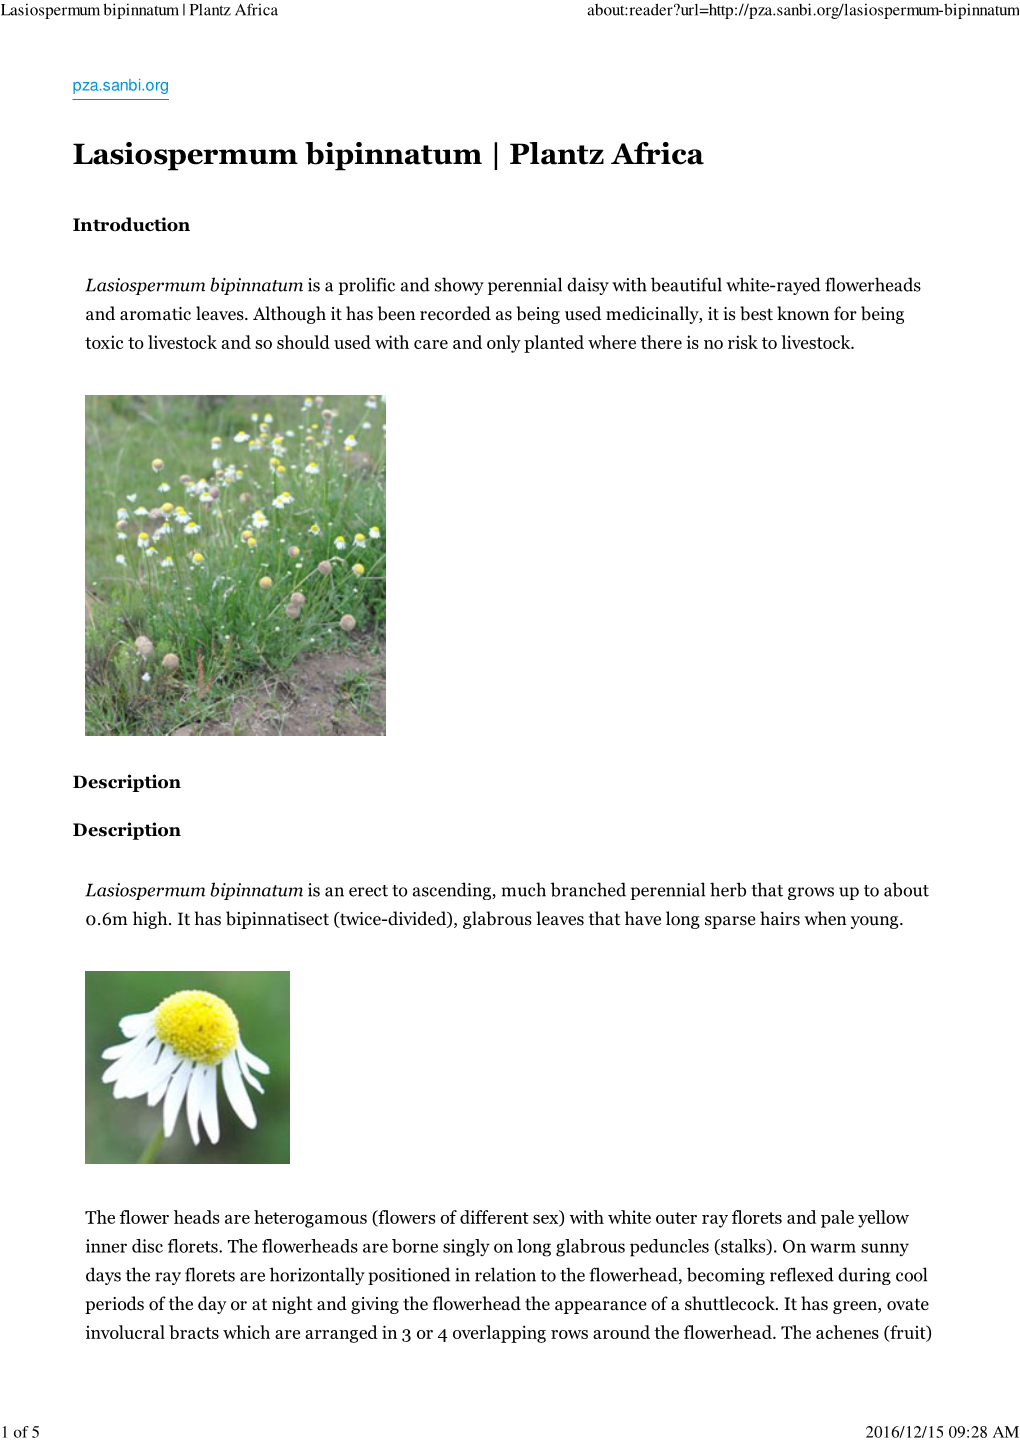 Lasiospermum Bipinnatum | Plantz Africa About:Reader?Url=